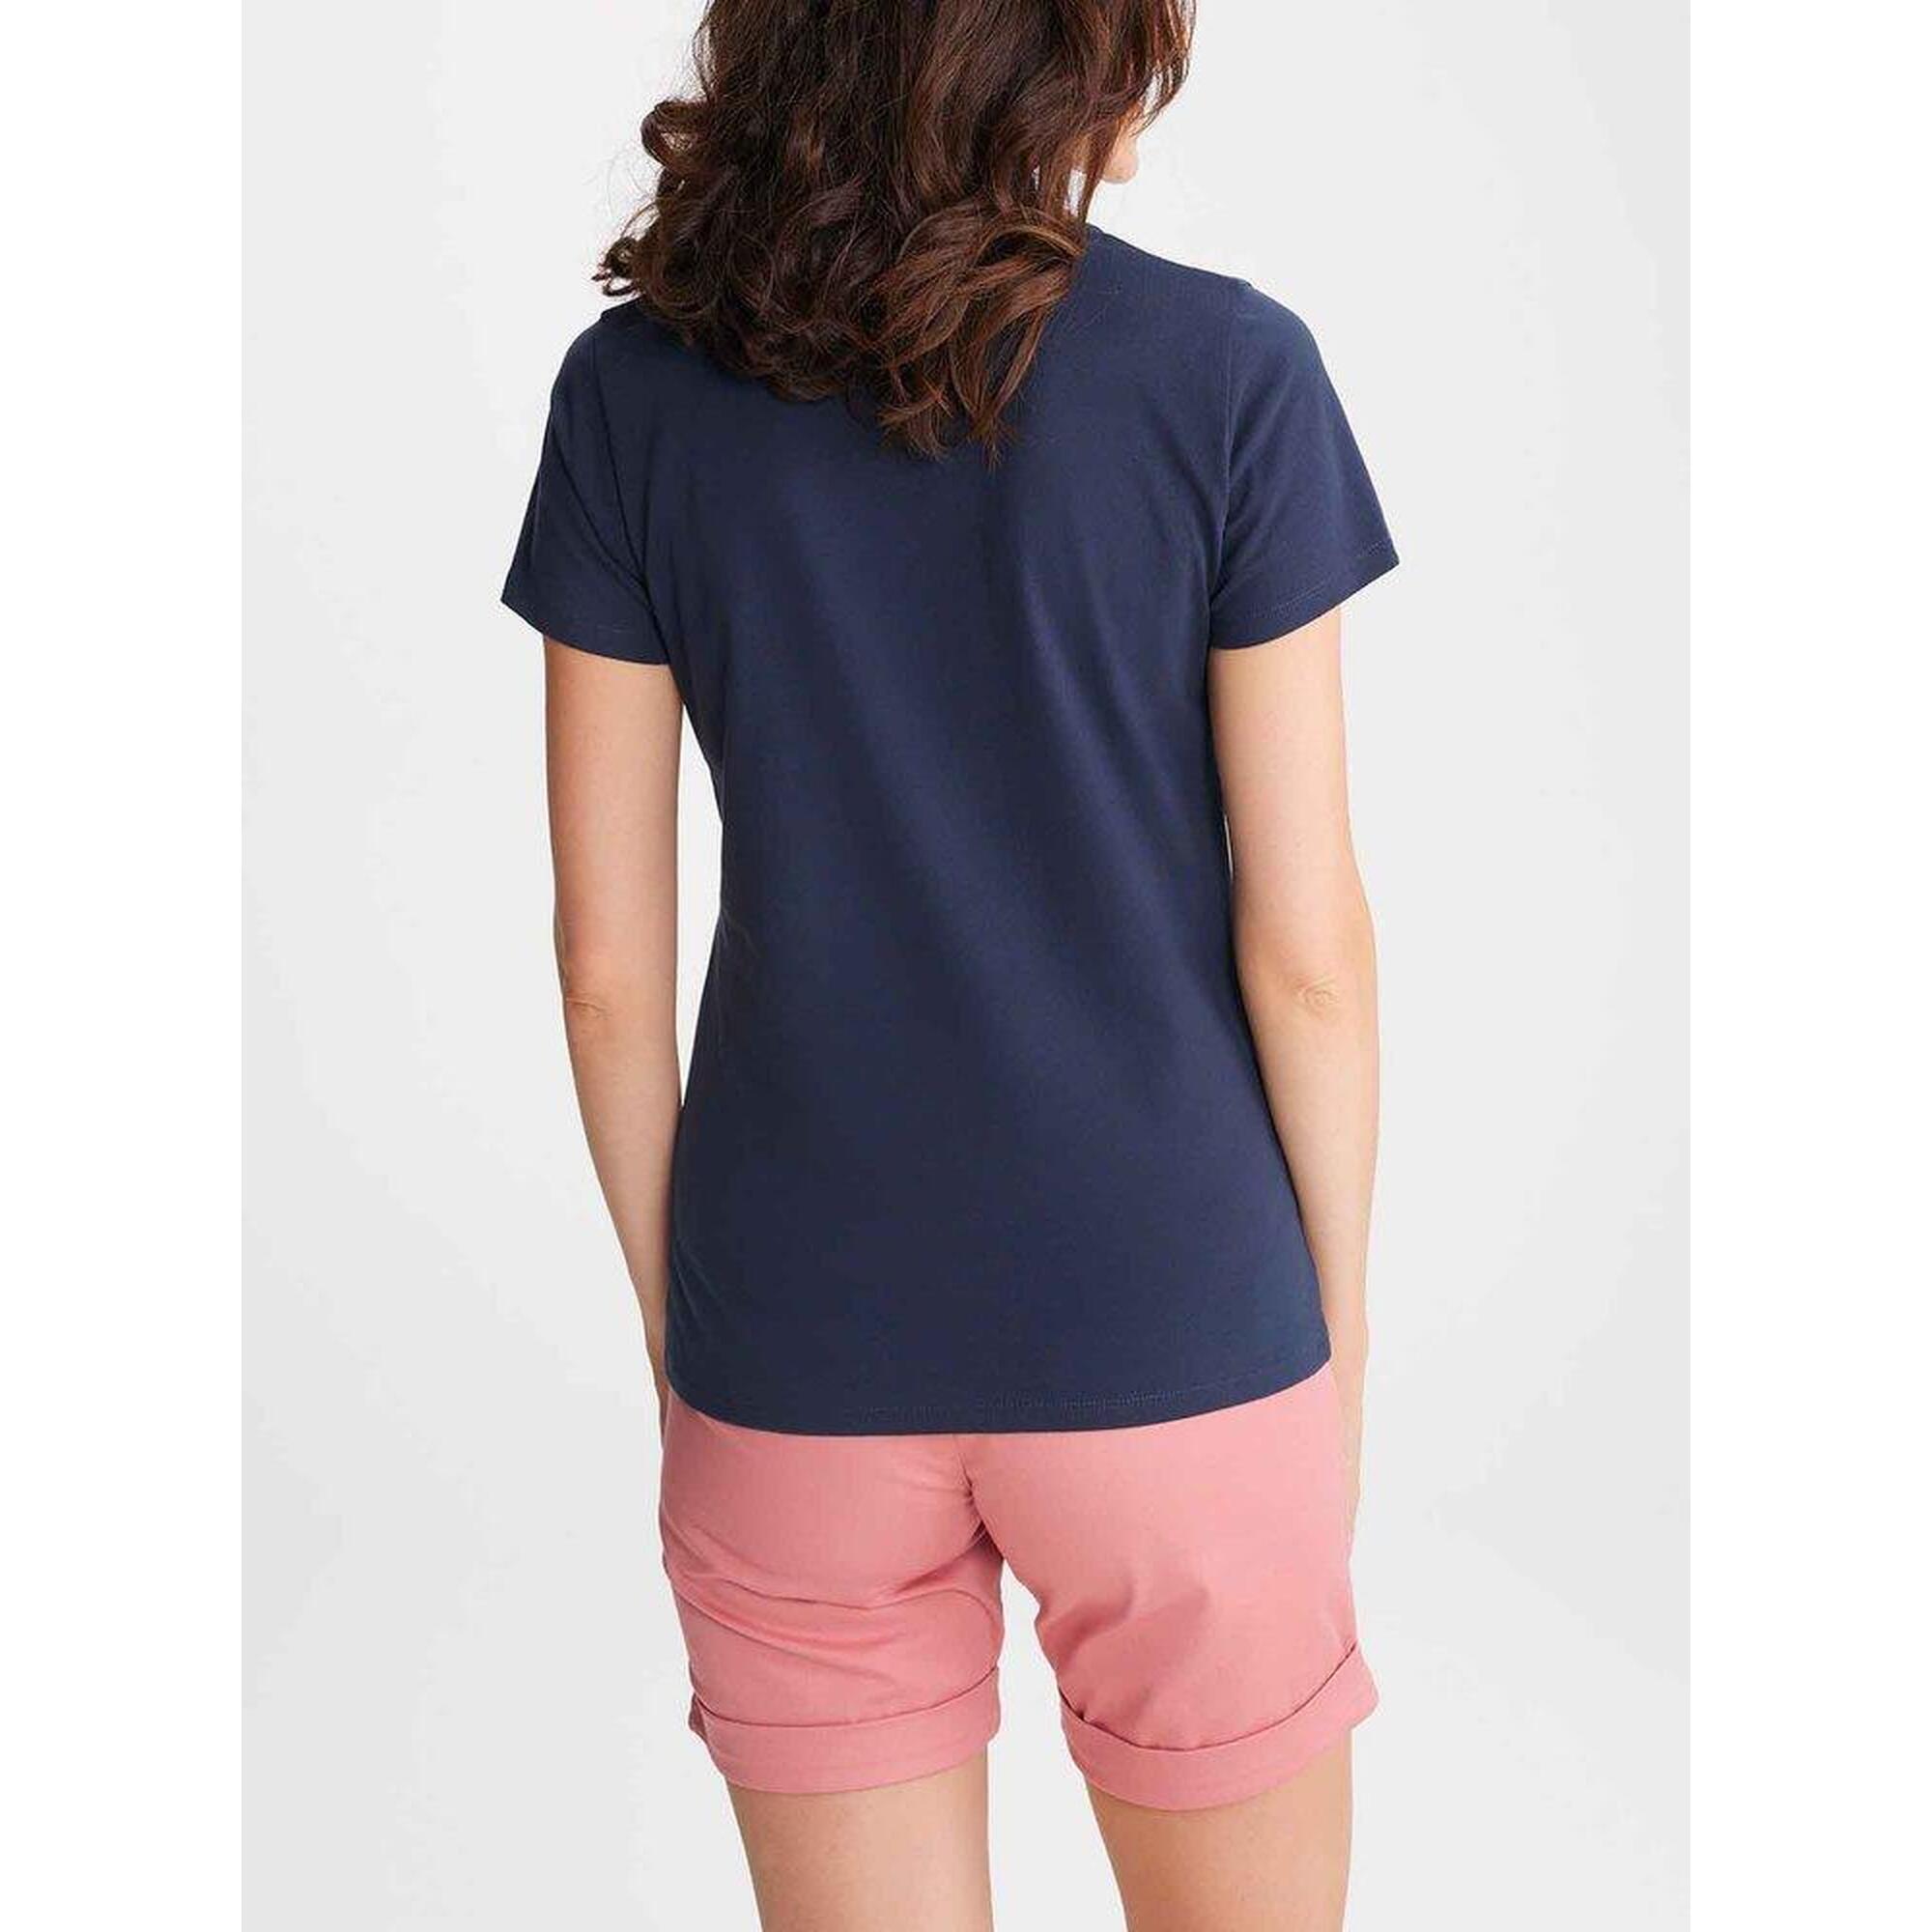 T-shirt manches courtes Femme - TESSAVER Navy